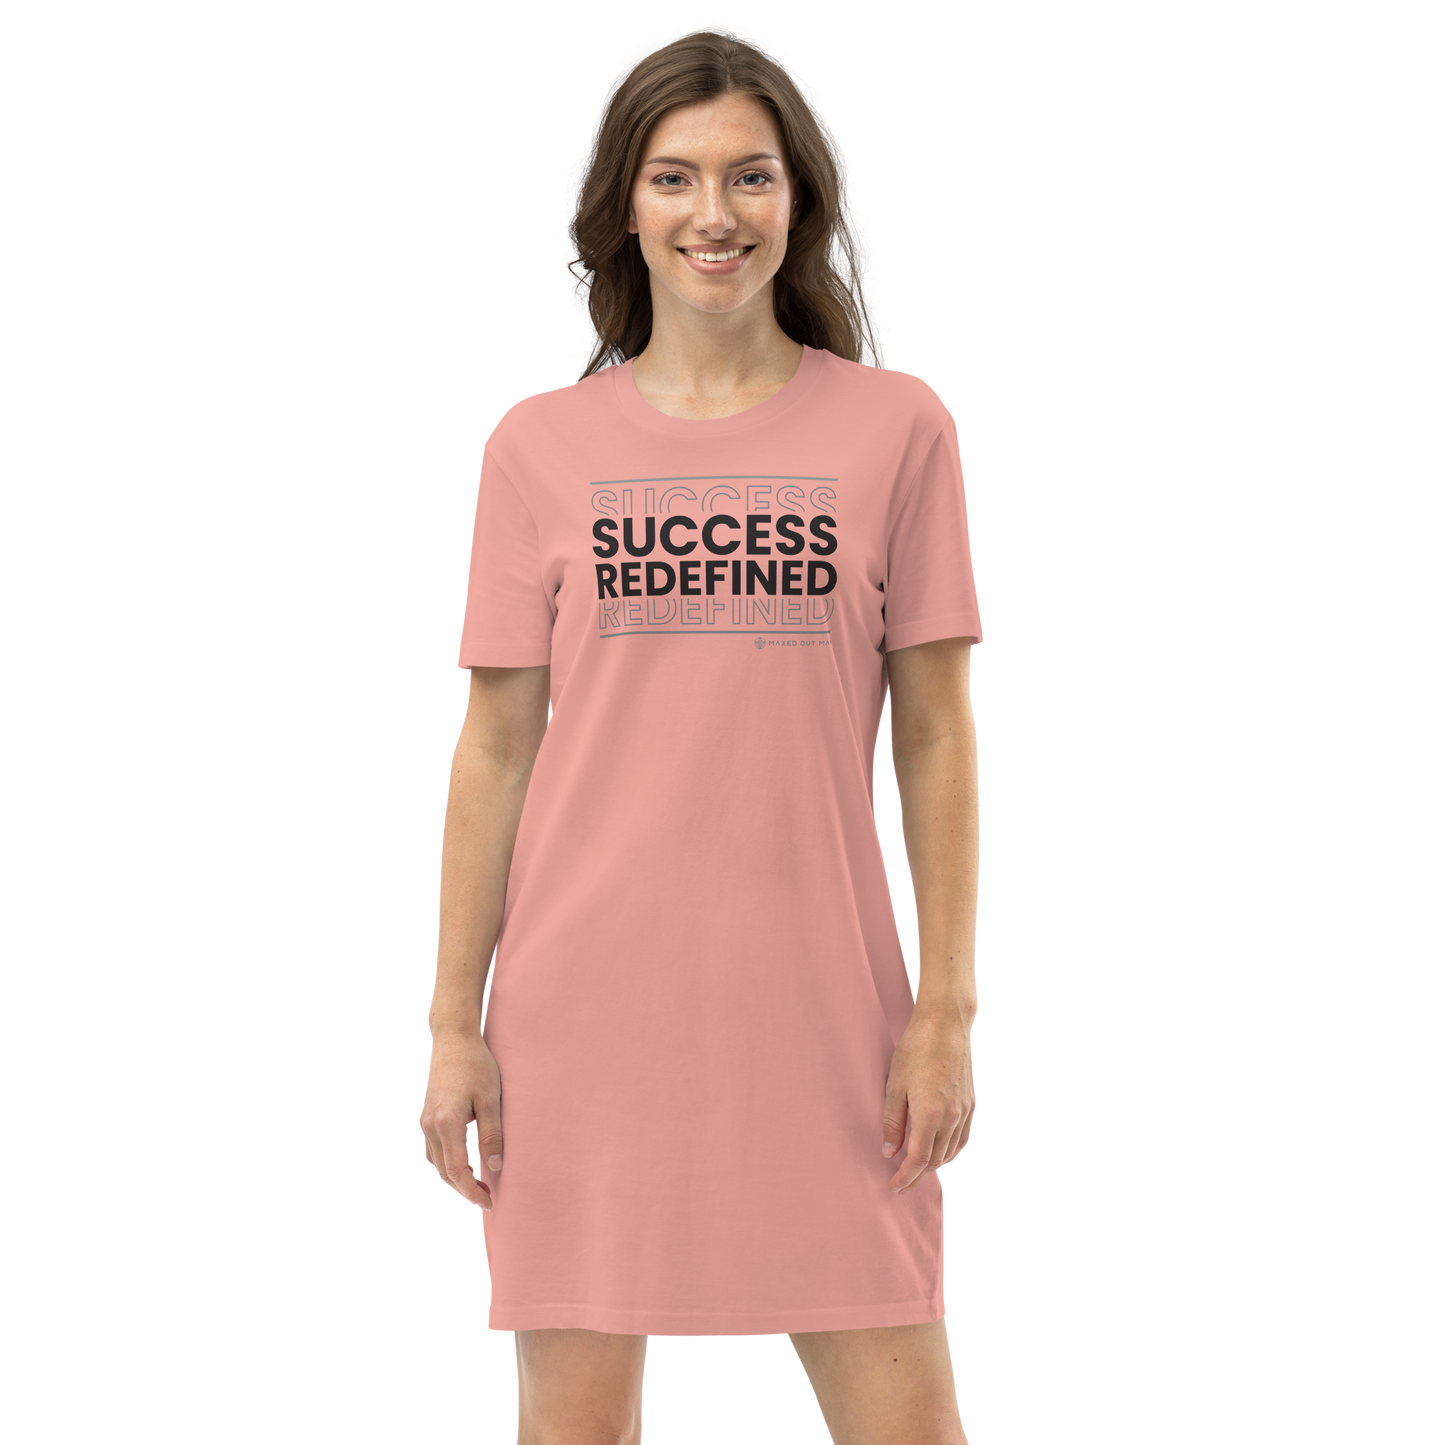 Success Redefined Organic Cotton T-Shirt Dress - Lighter Colors